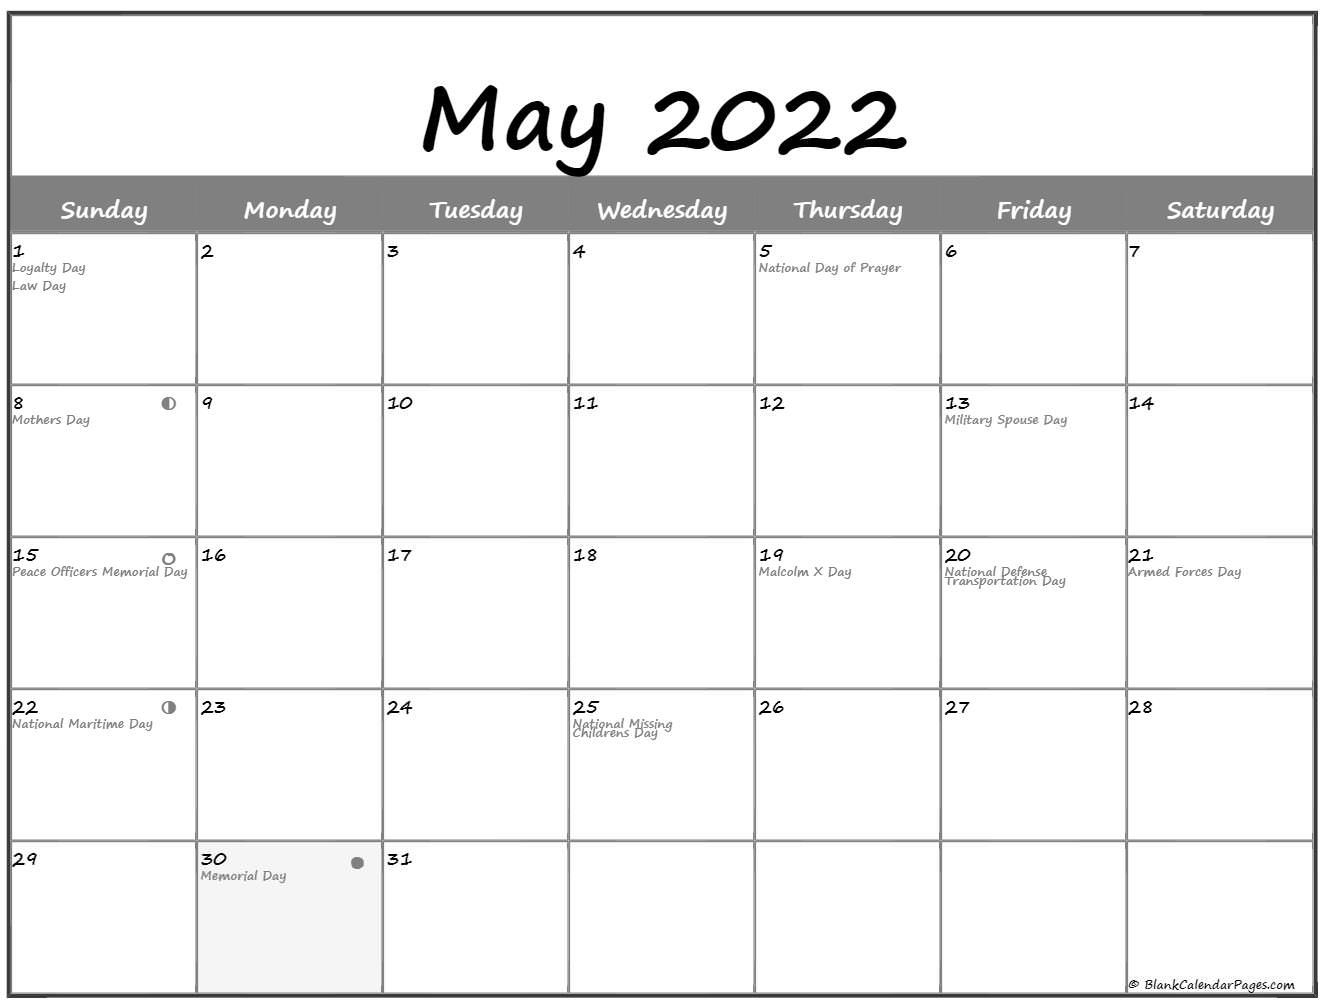 May 2022 Lunar Calendar | Moon Phase Calendar